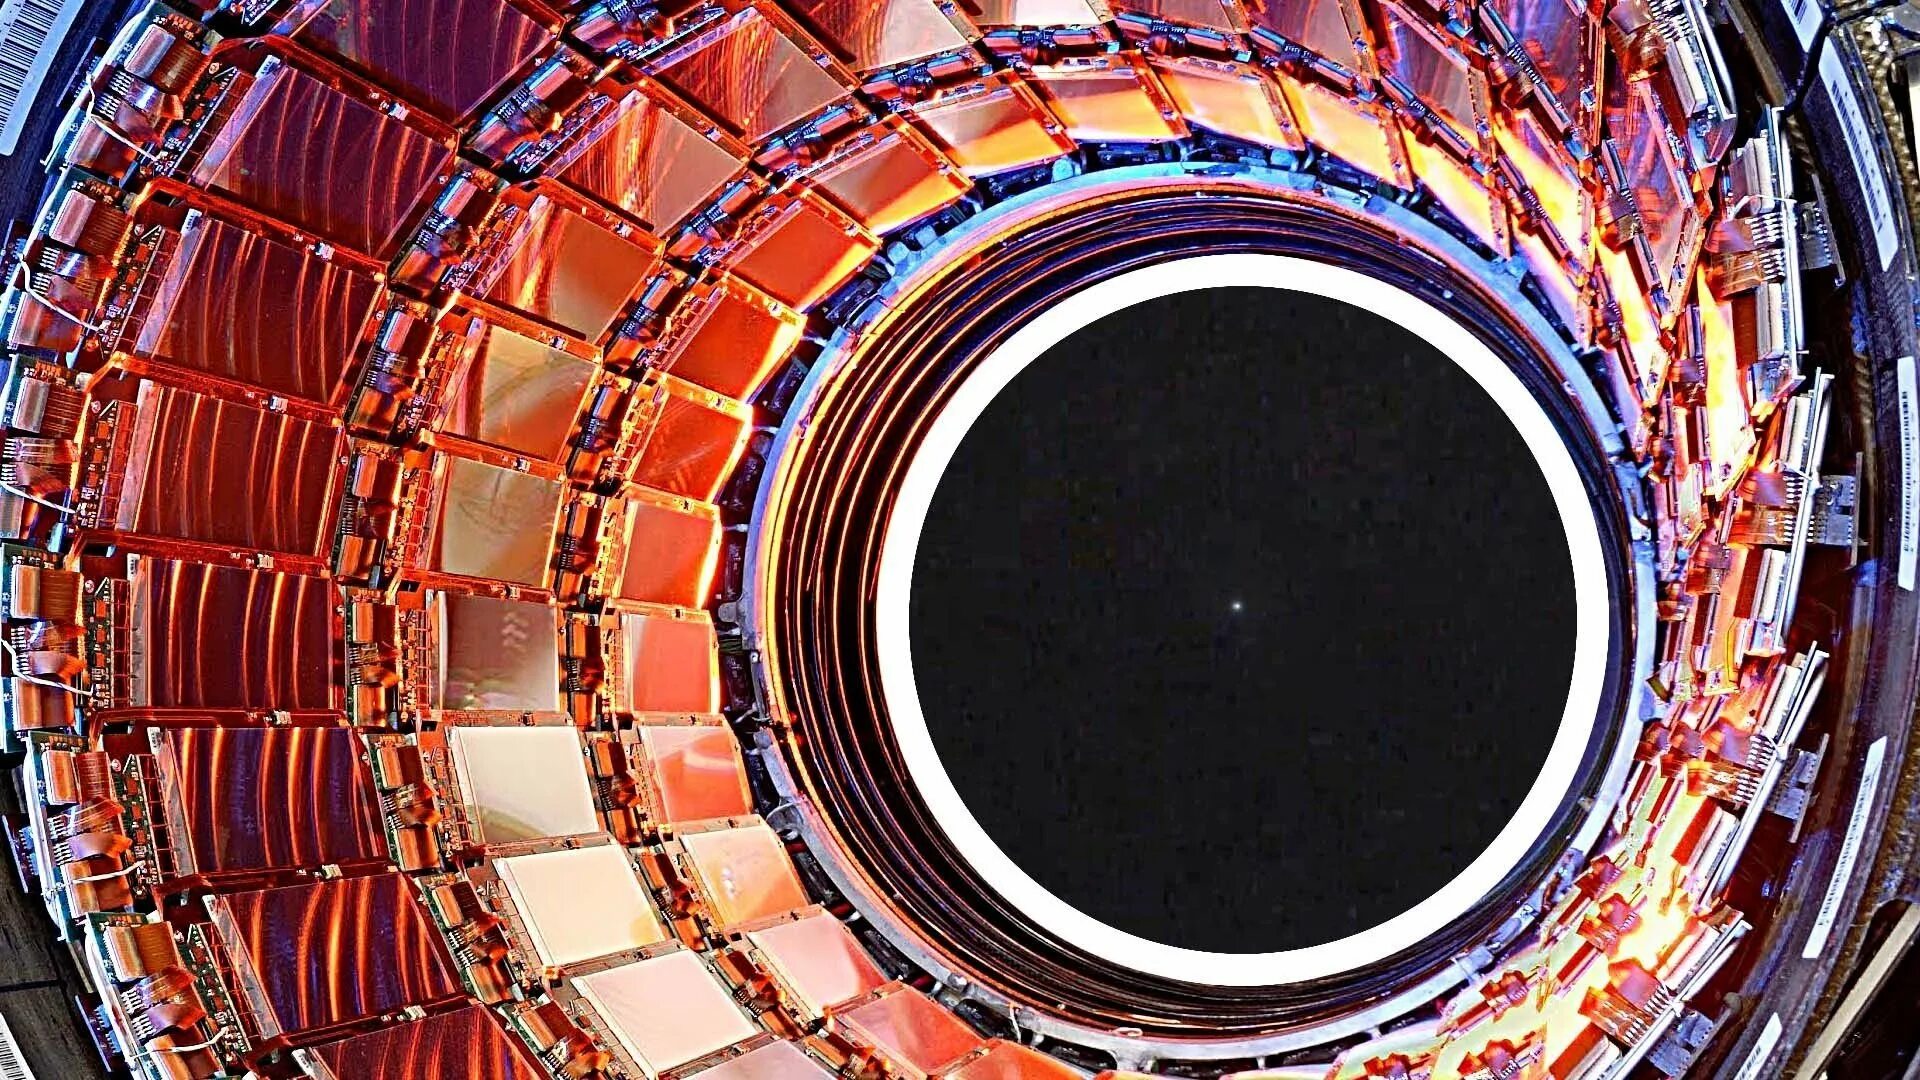 ЦЕРН коллайдер. Большой адронный коллайдер. Большой адронный коллайдер в CERN. Атомный коллайдер в Швейцарии. Андроидный коллайдер это